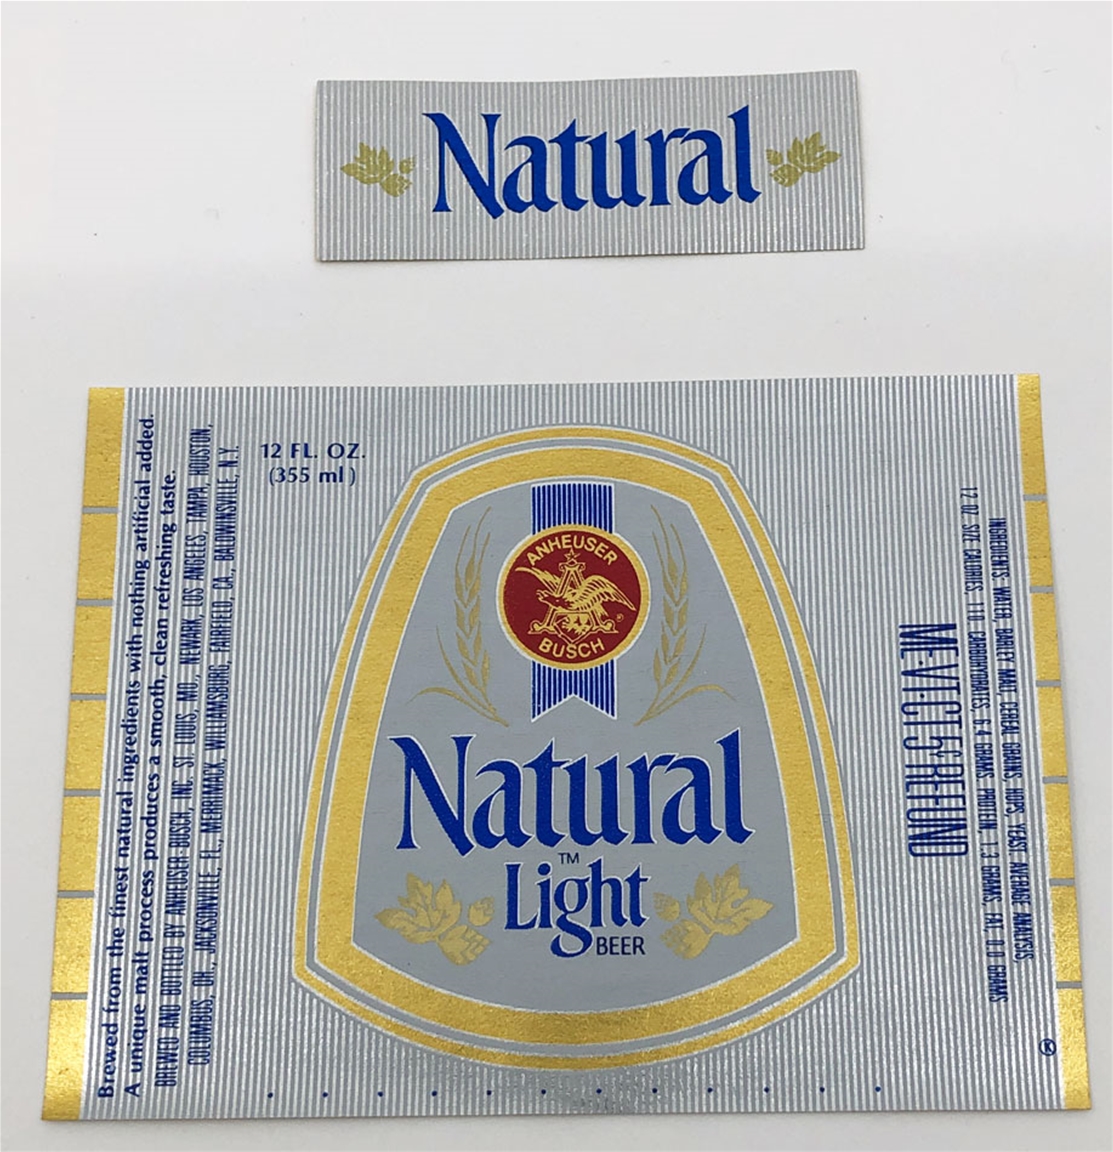 Natural Light Beer Label with neck label